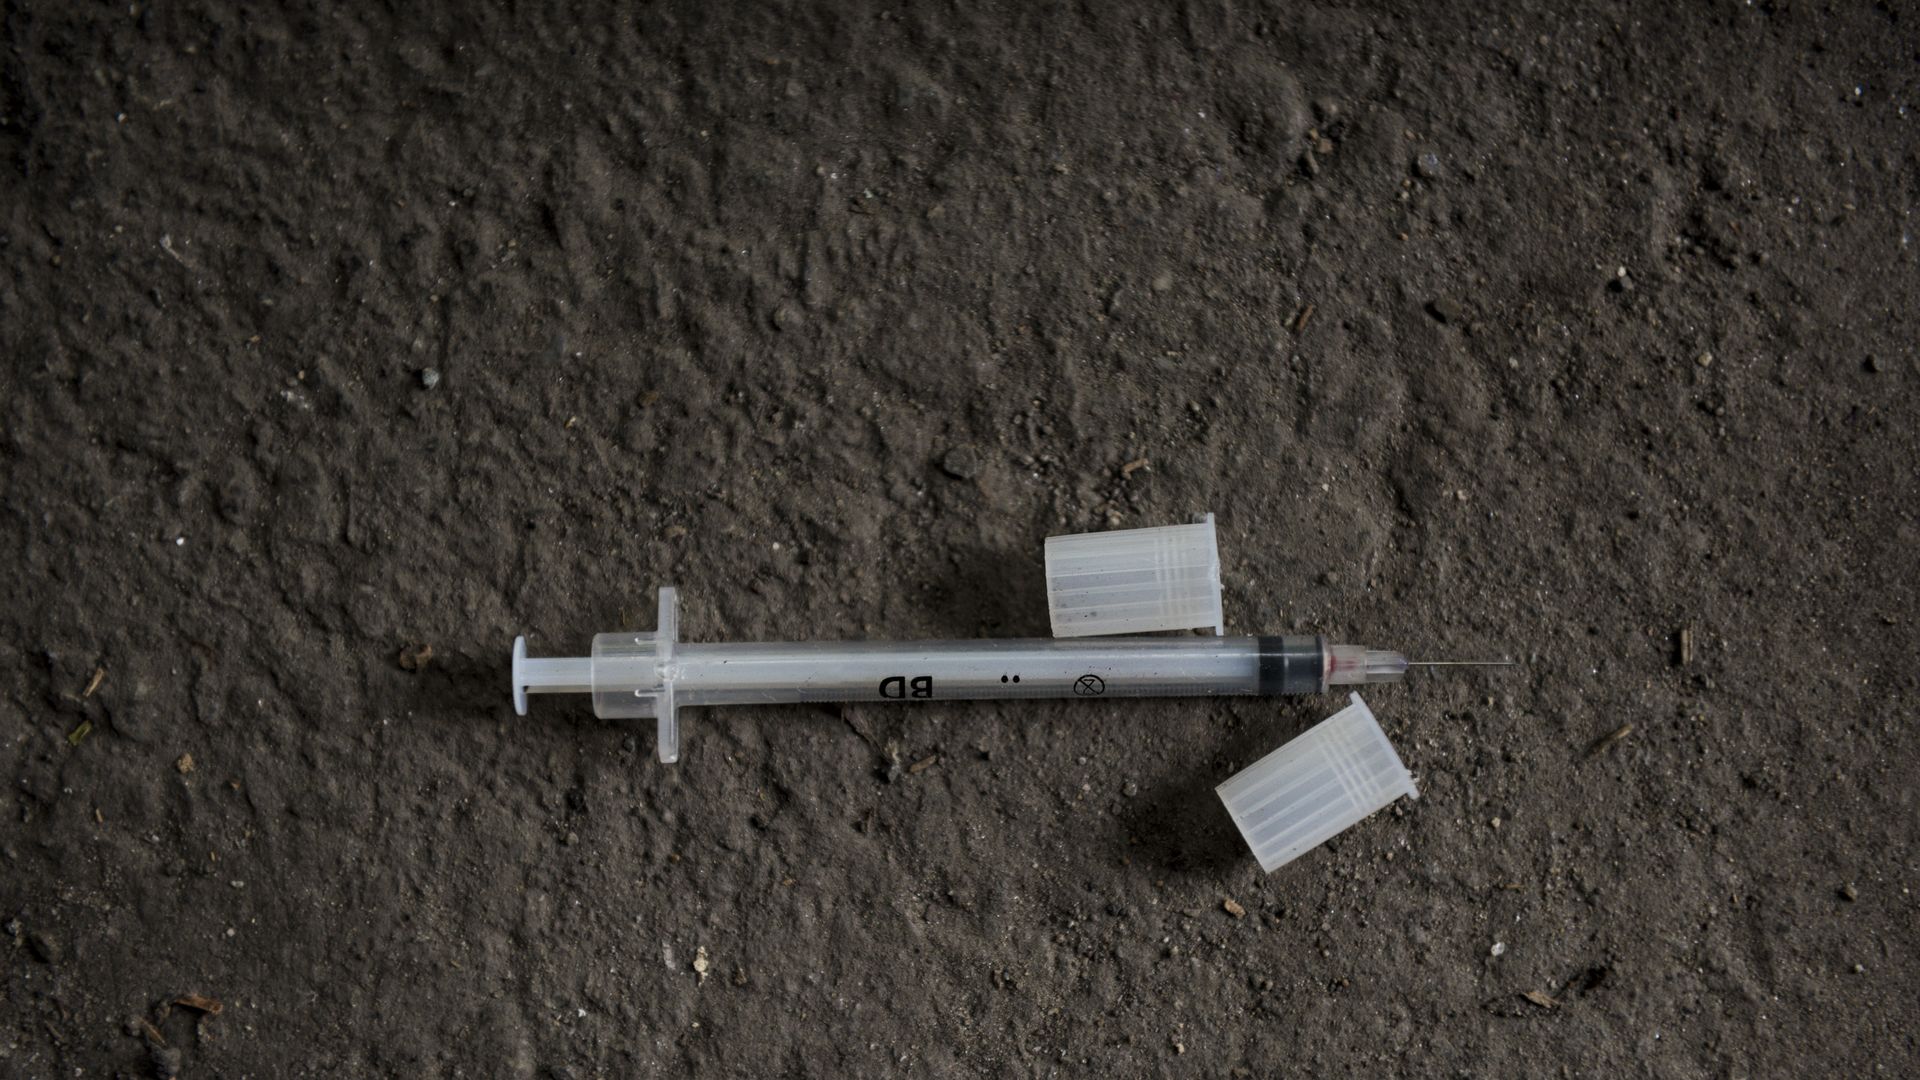 A used syringe under the Joseph W. Casey Bridge in Lawrence, Massachusetts.